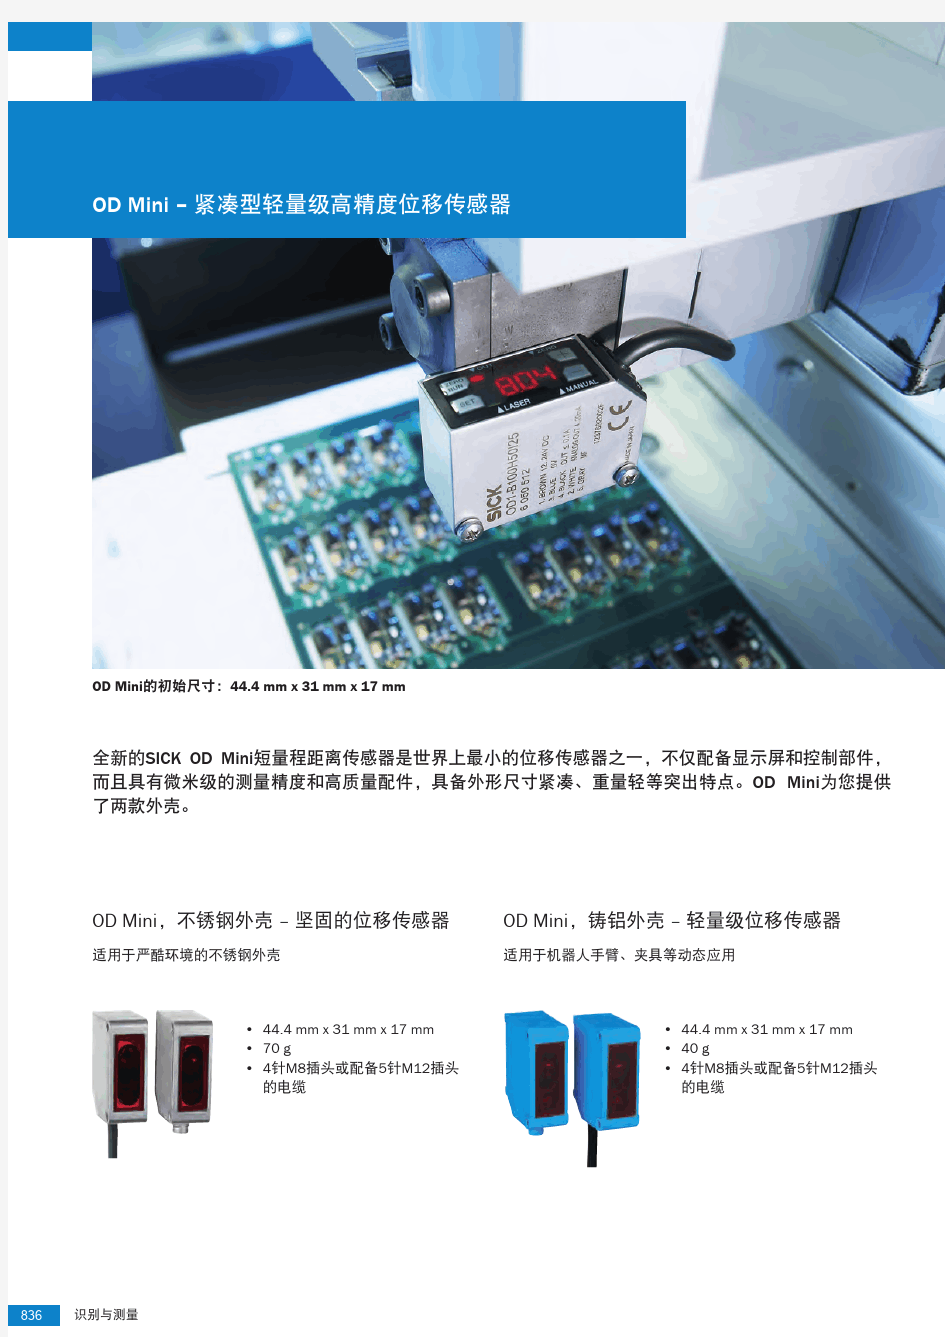 OD mini短量程激光测距传感器选型手册(中文版)